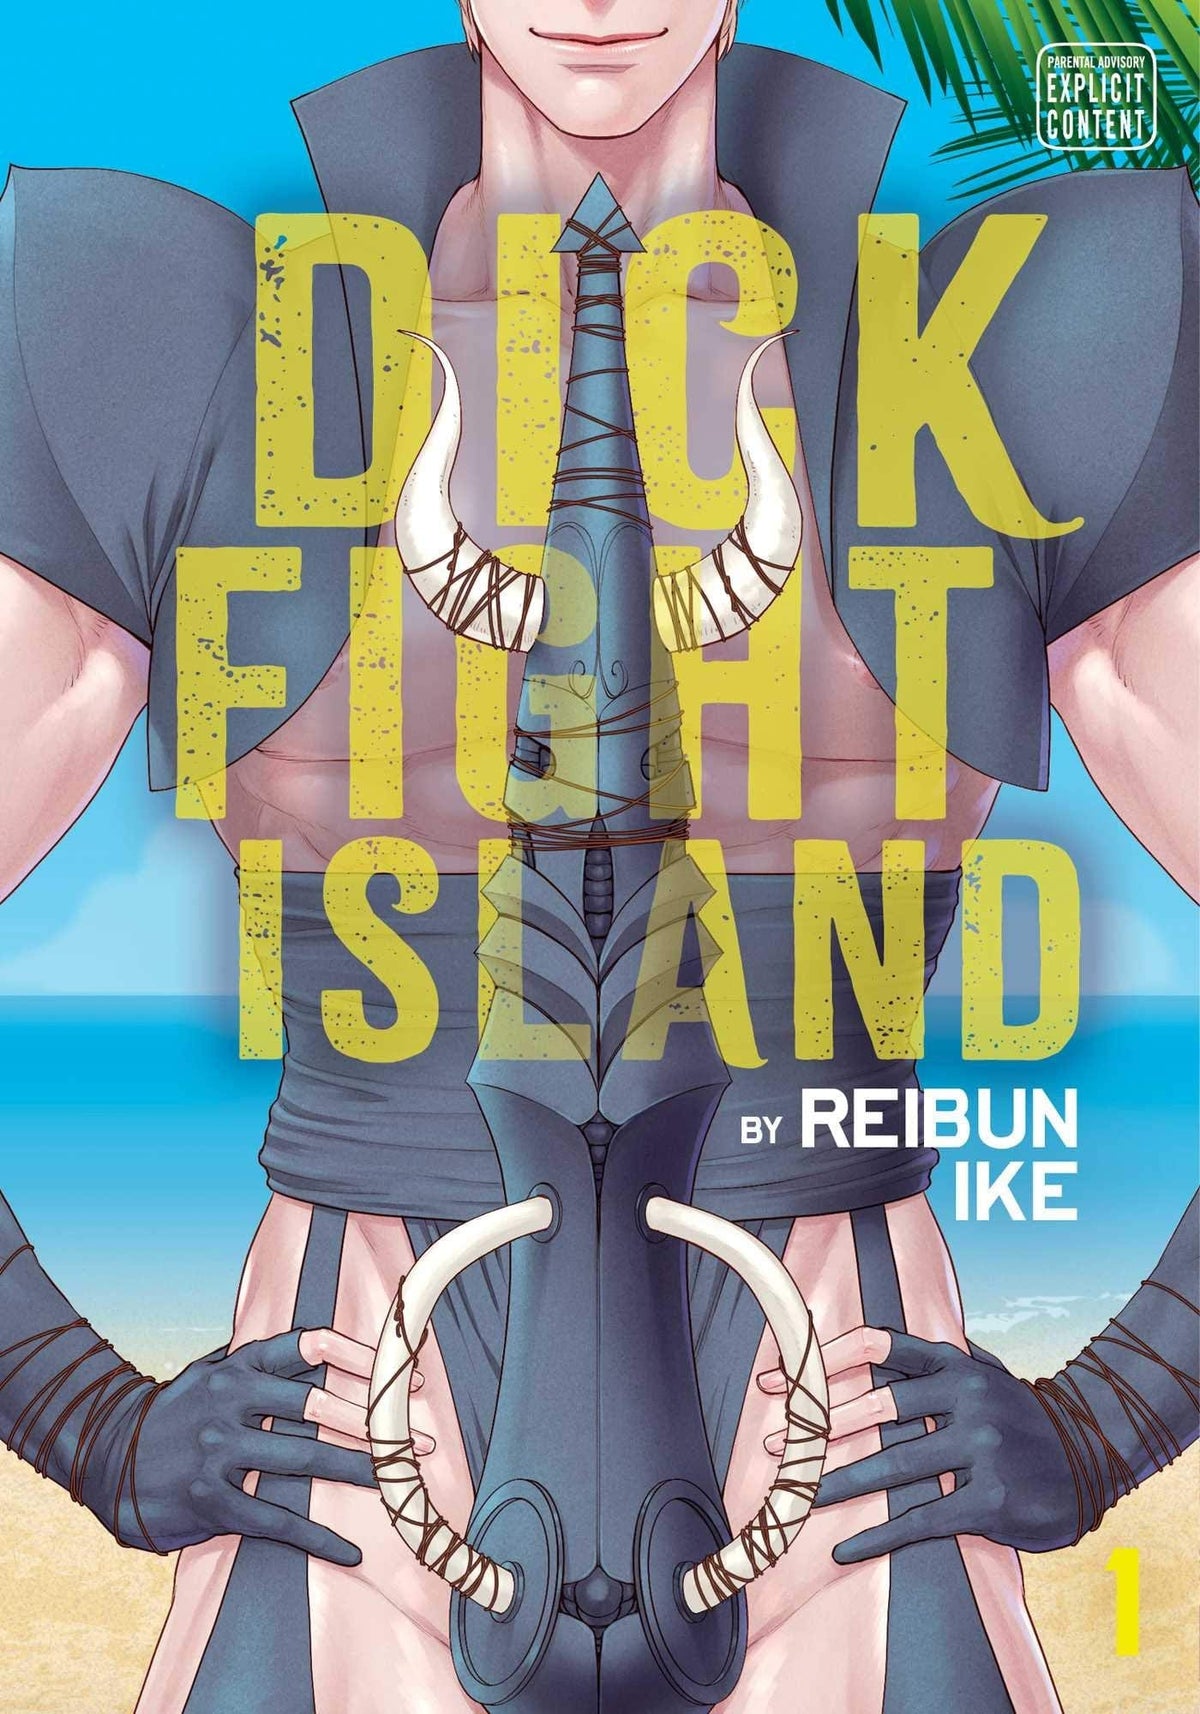 Dick Fight Island Vol. 1 - Third Eye